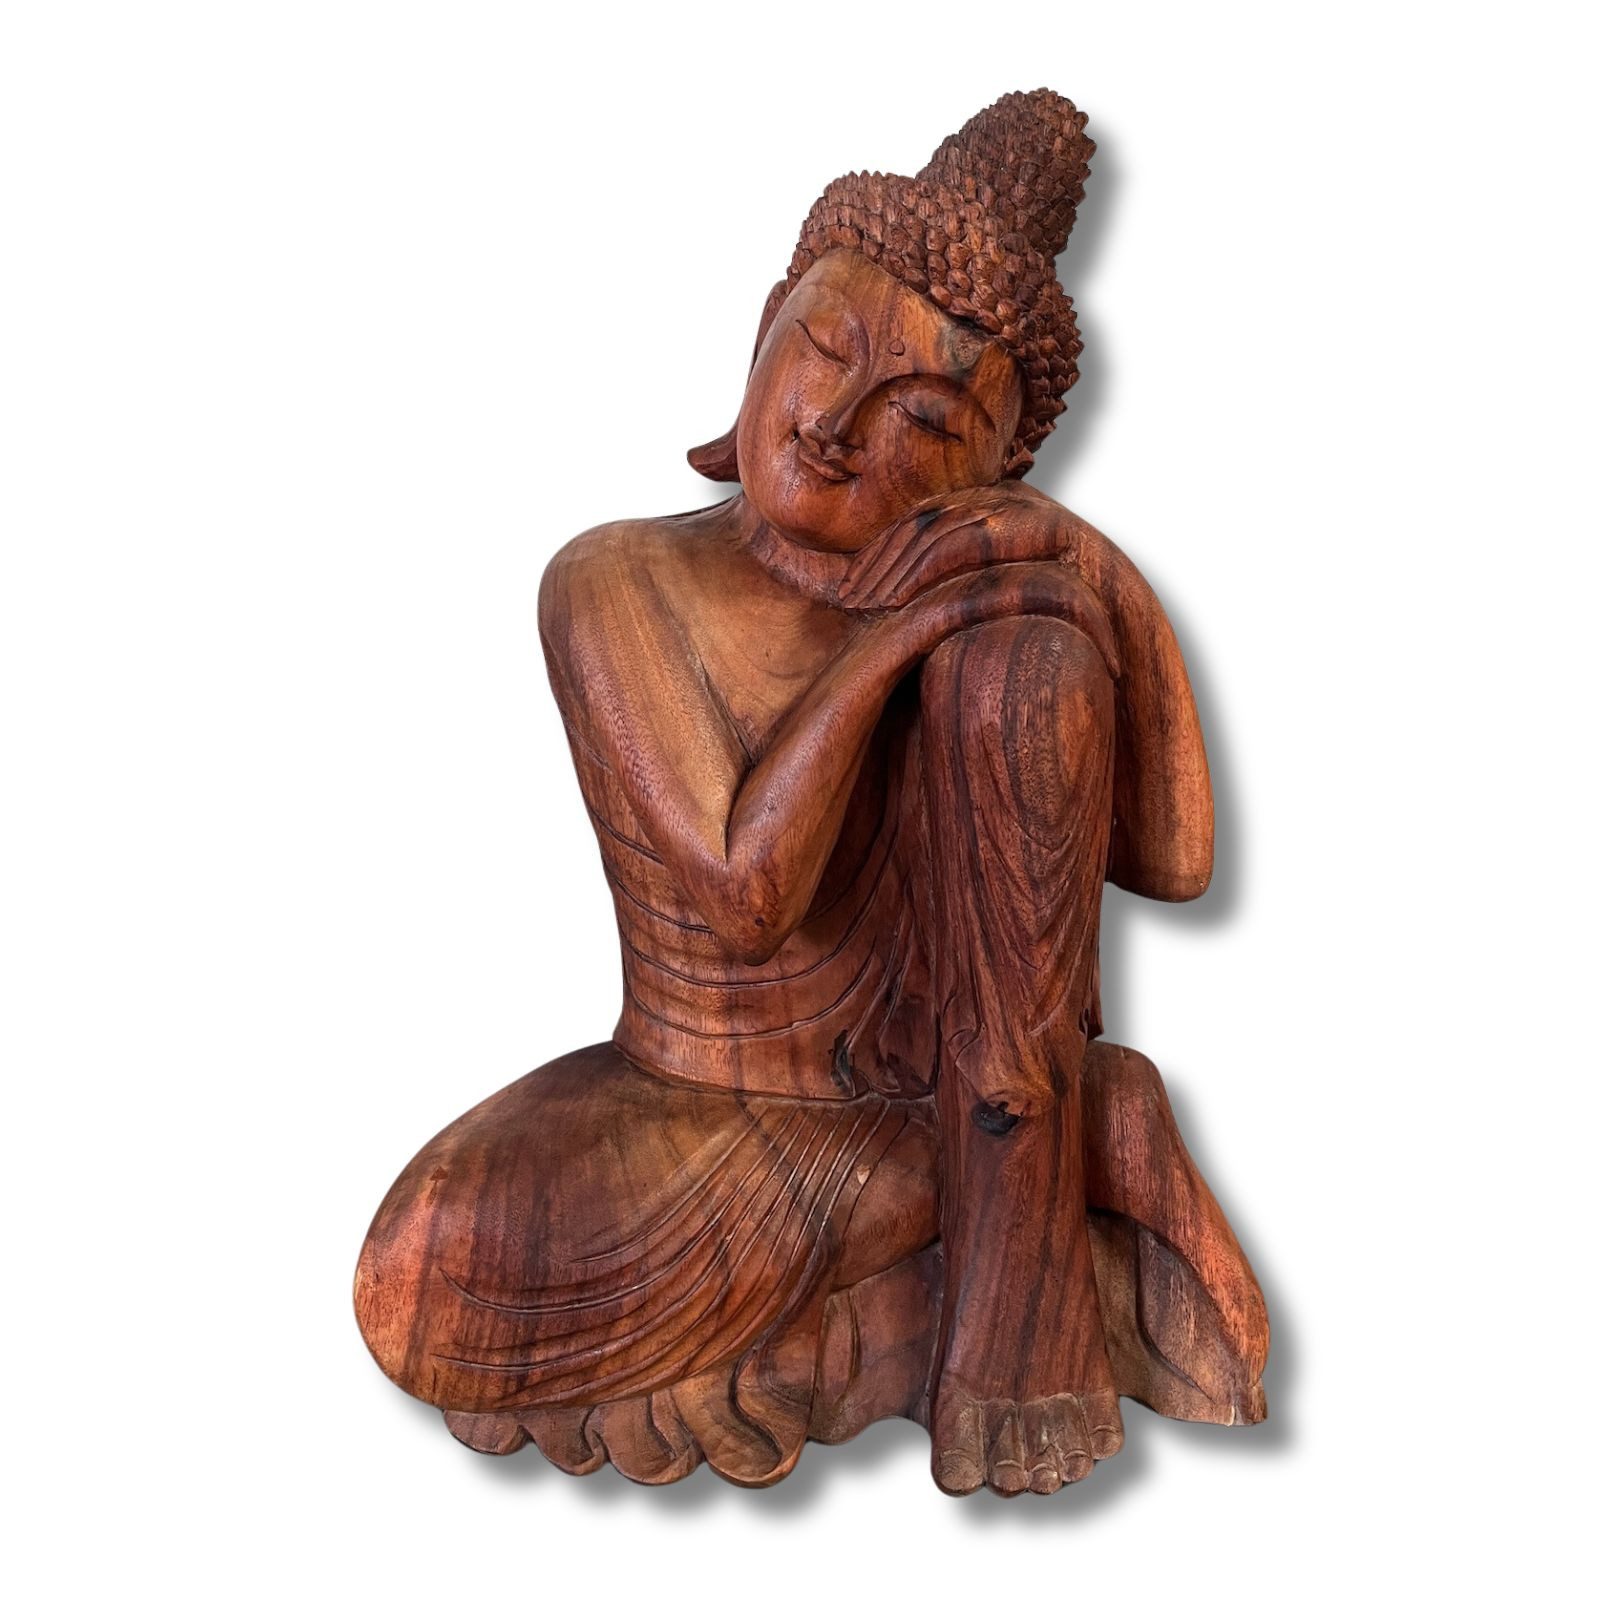 Asien LifeStyle Buddhafigur Buddha Figur Holz Statue Relax - 61cm groß